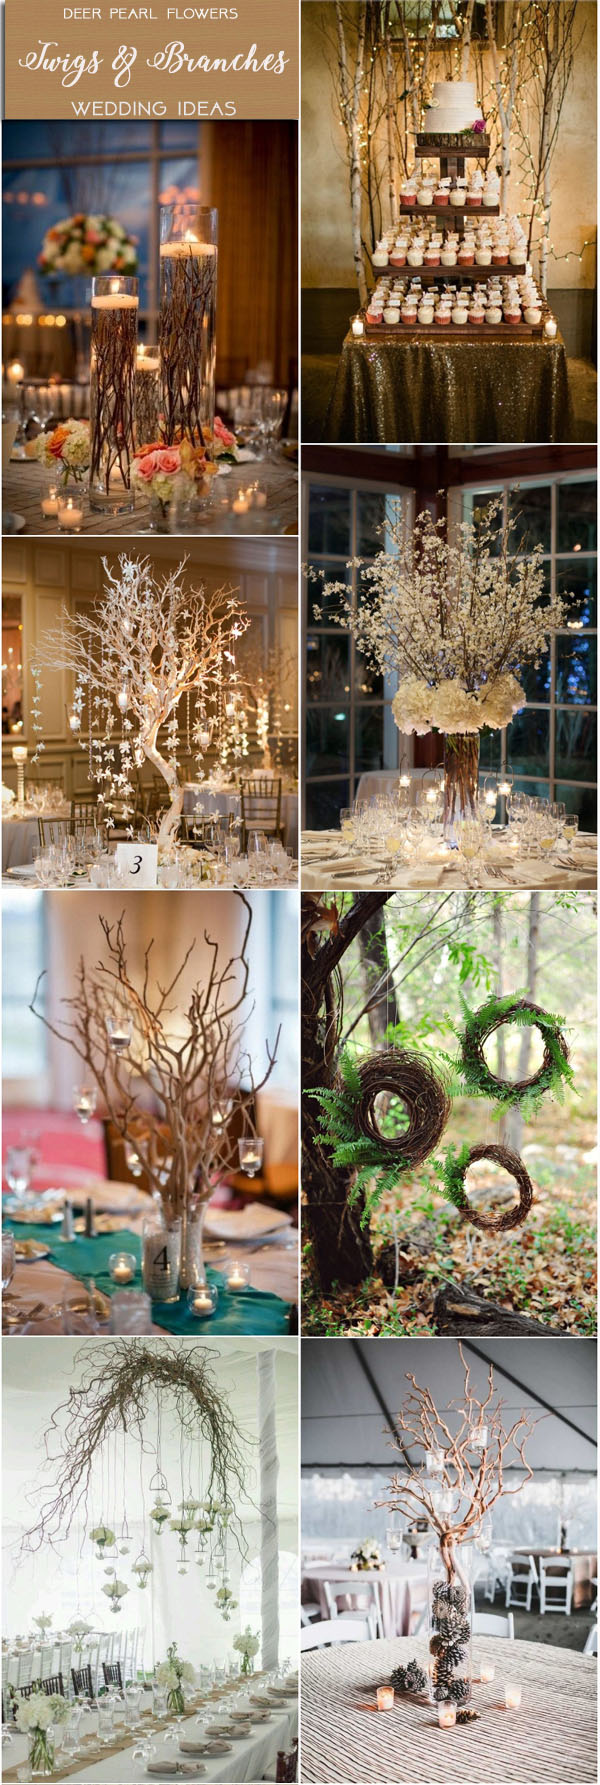 Rustic country wedding dieas - twigs & branches wedding ideas